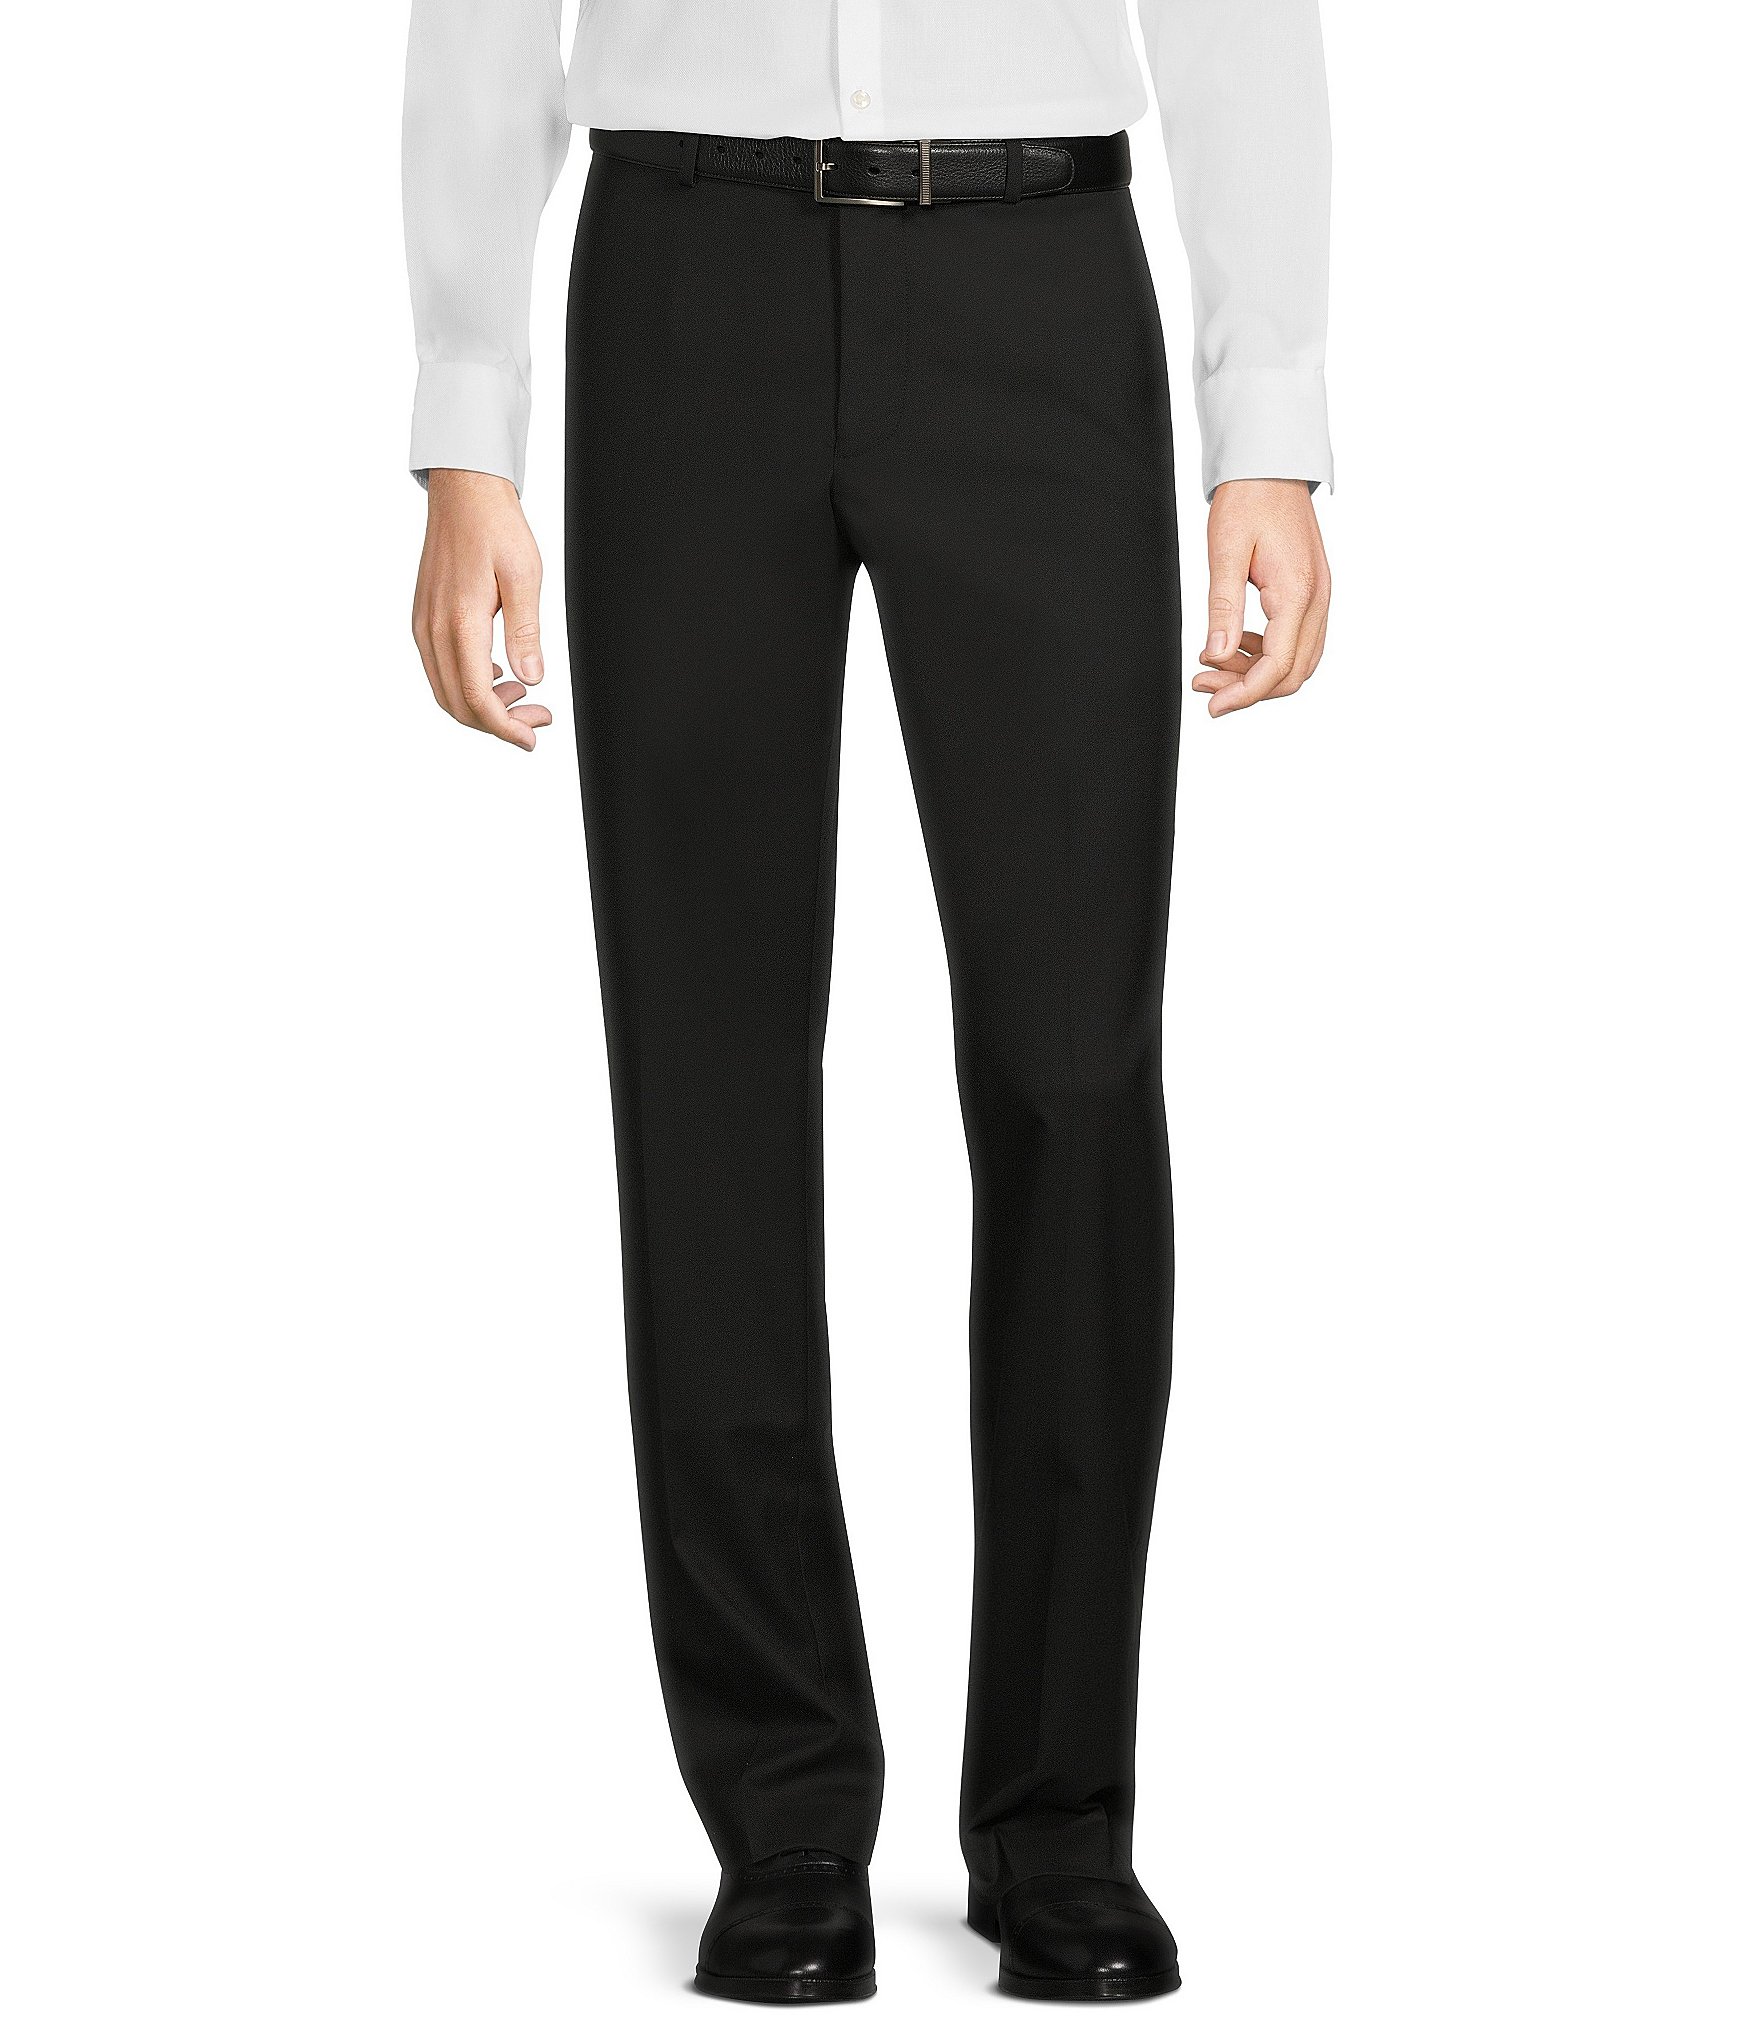 Black Men's Suit Separate Pants | Dillard's